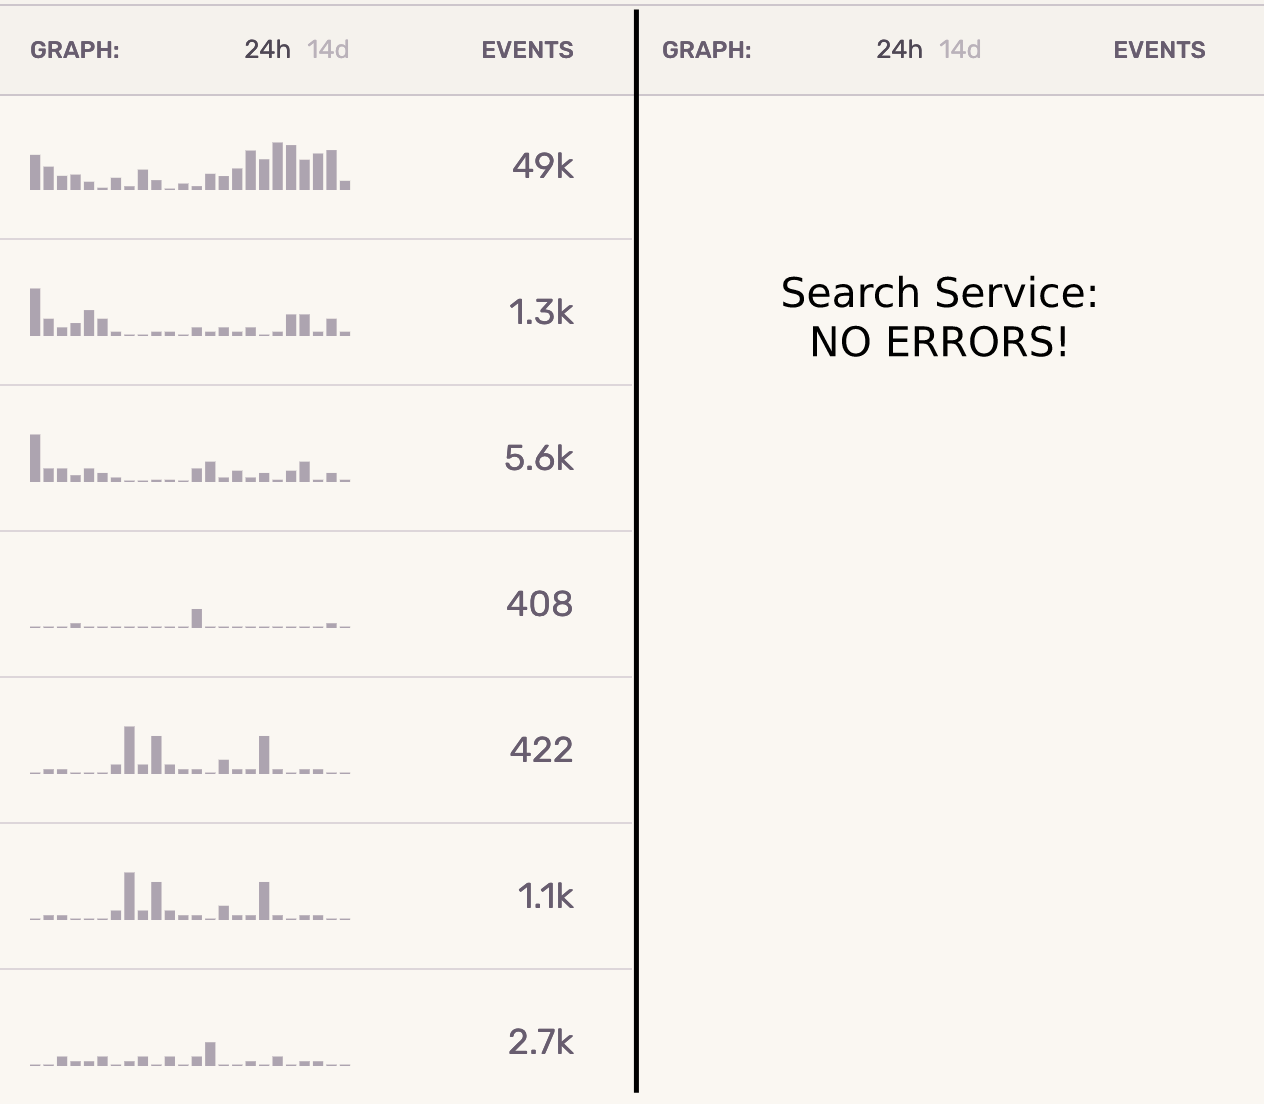 Errors in the vehicle-service vs search-service